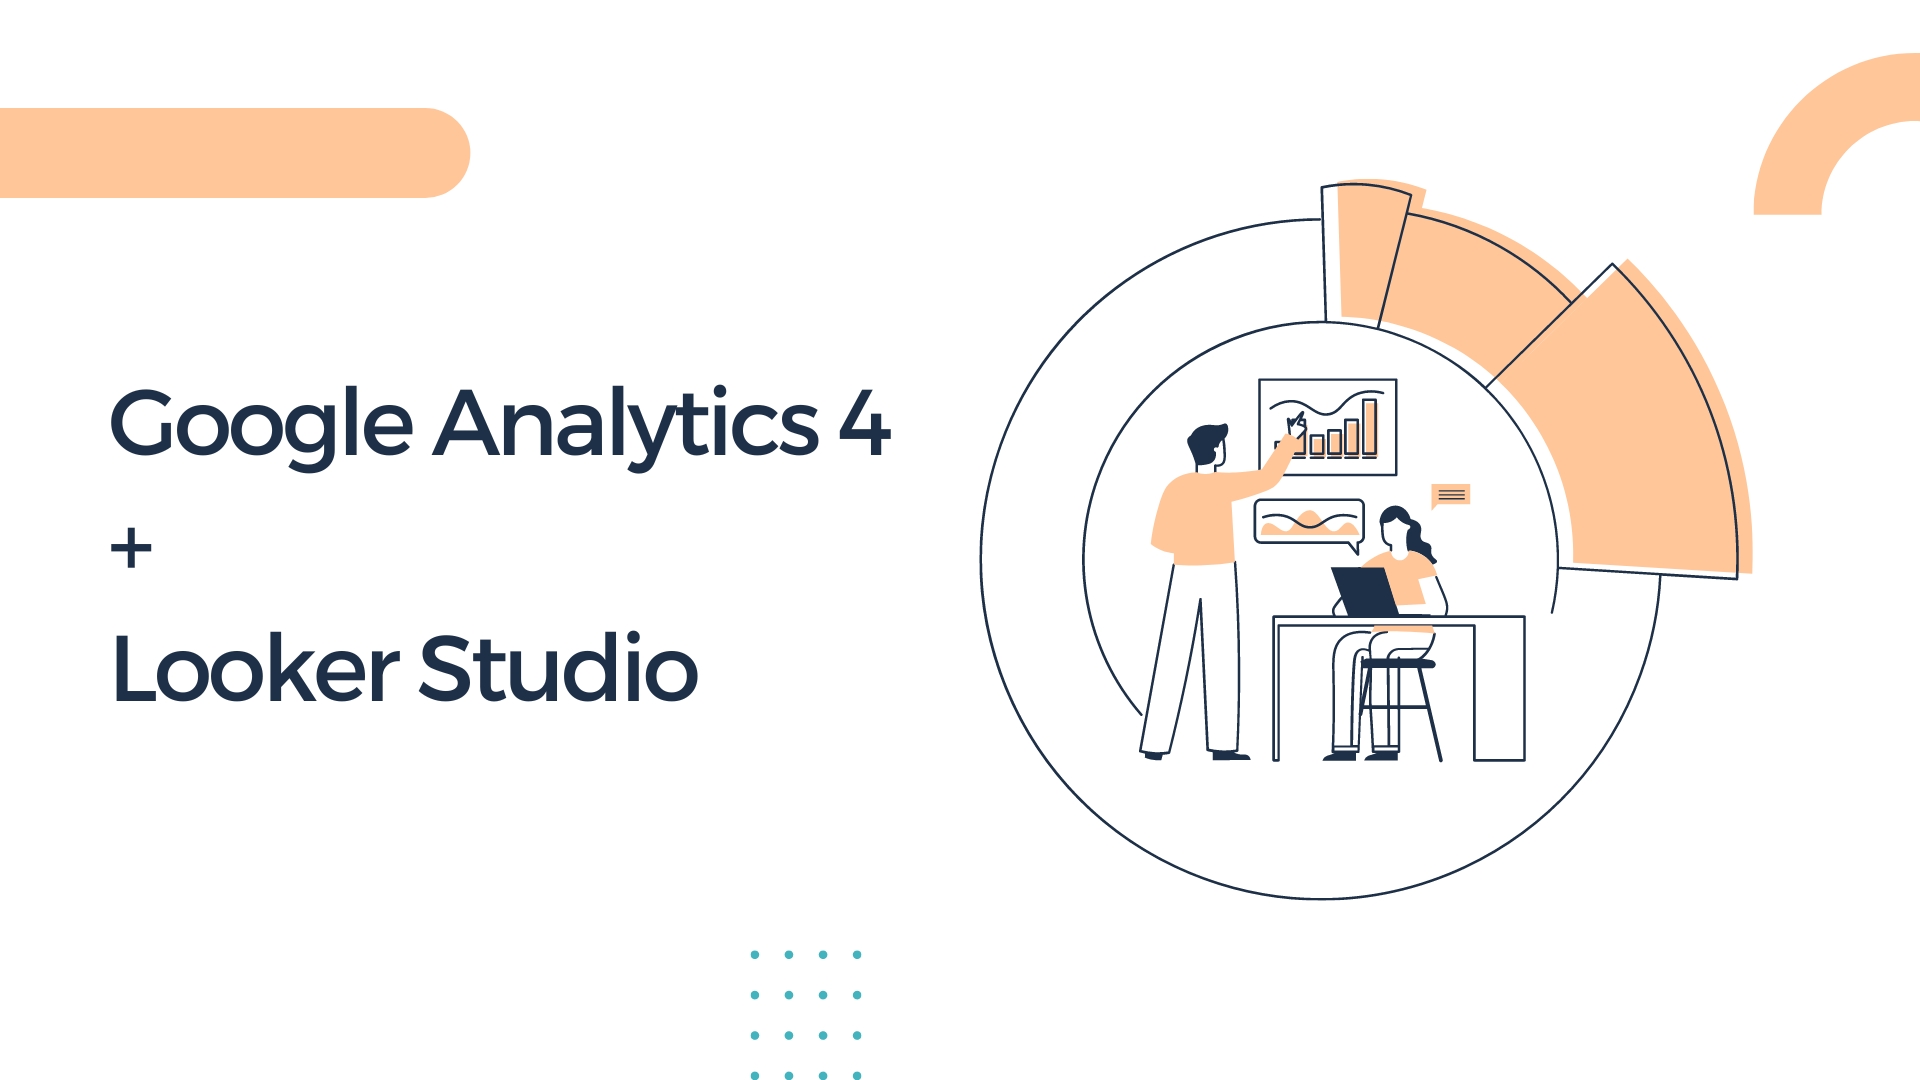 Google Analytics 4 and Looker Studio